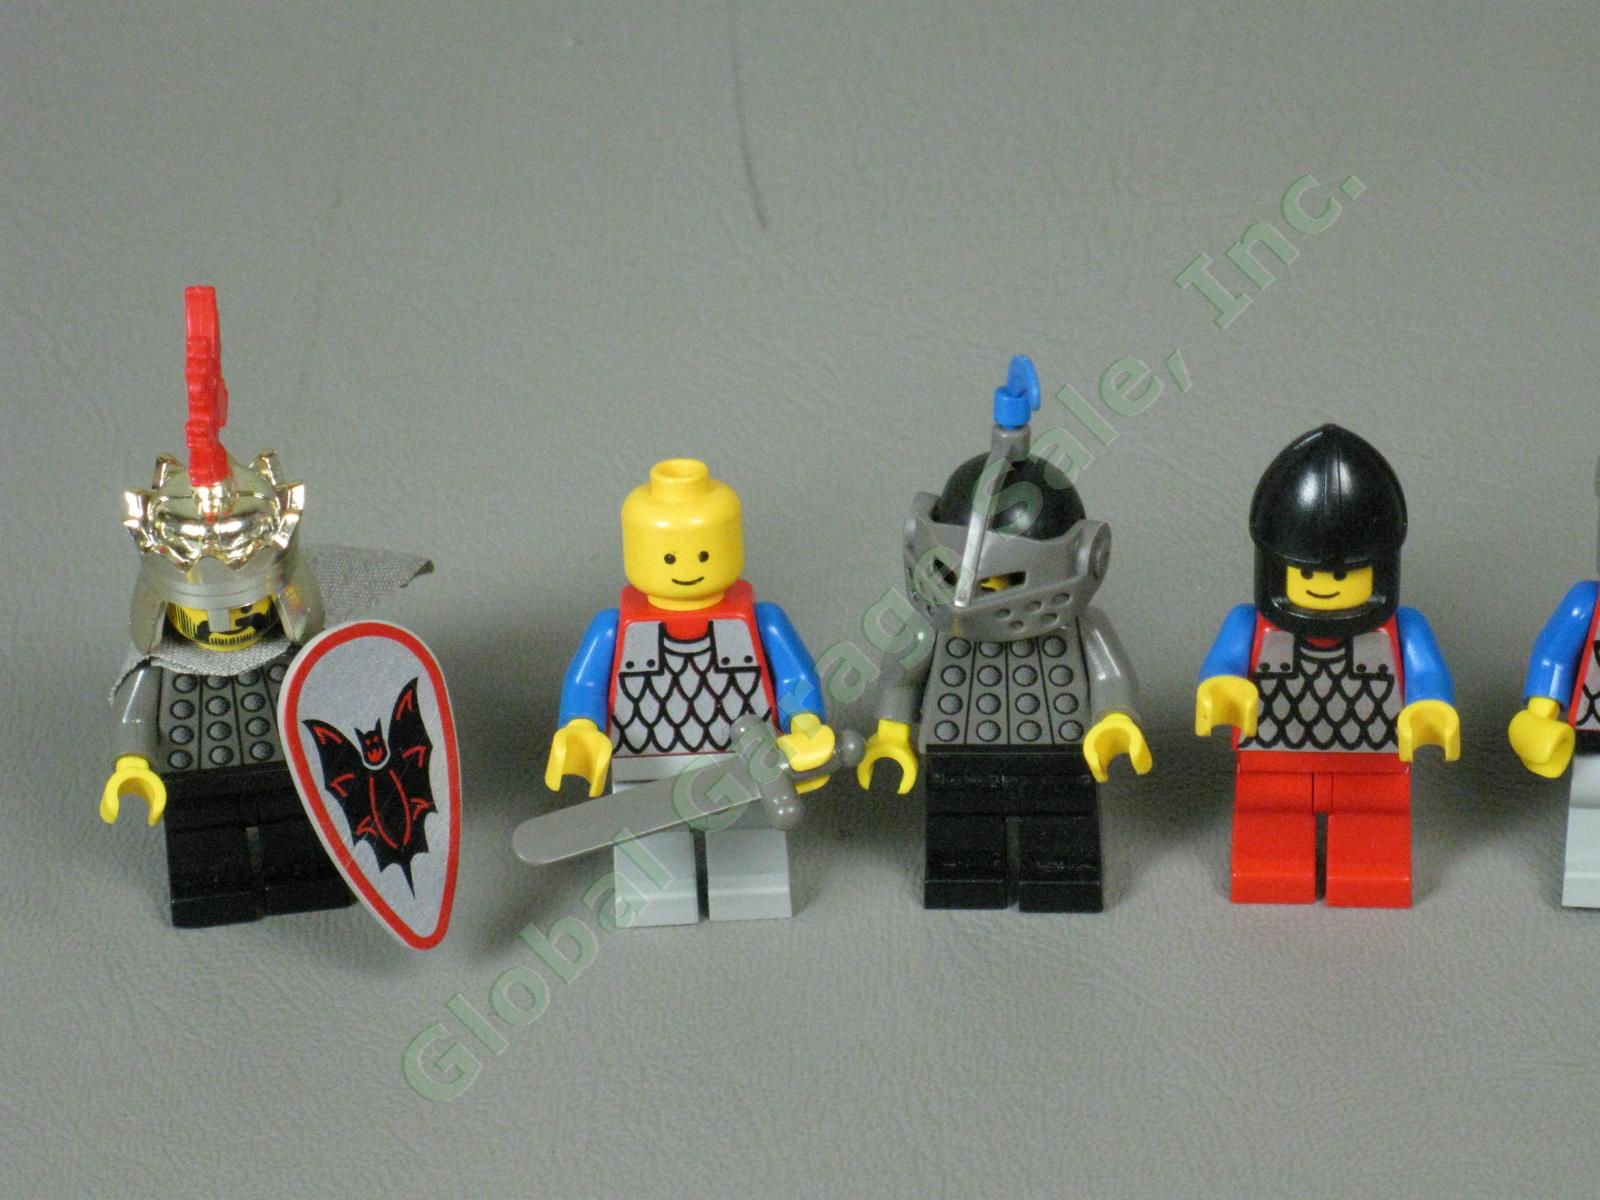 HUGE Lot 45 Lego Medieval Fright Knight Figure Minifigure Castle Armor Extra Set 4